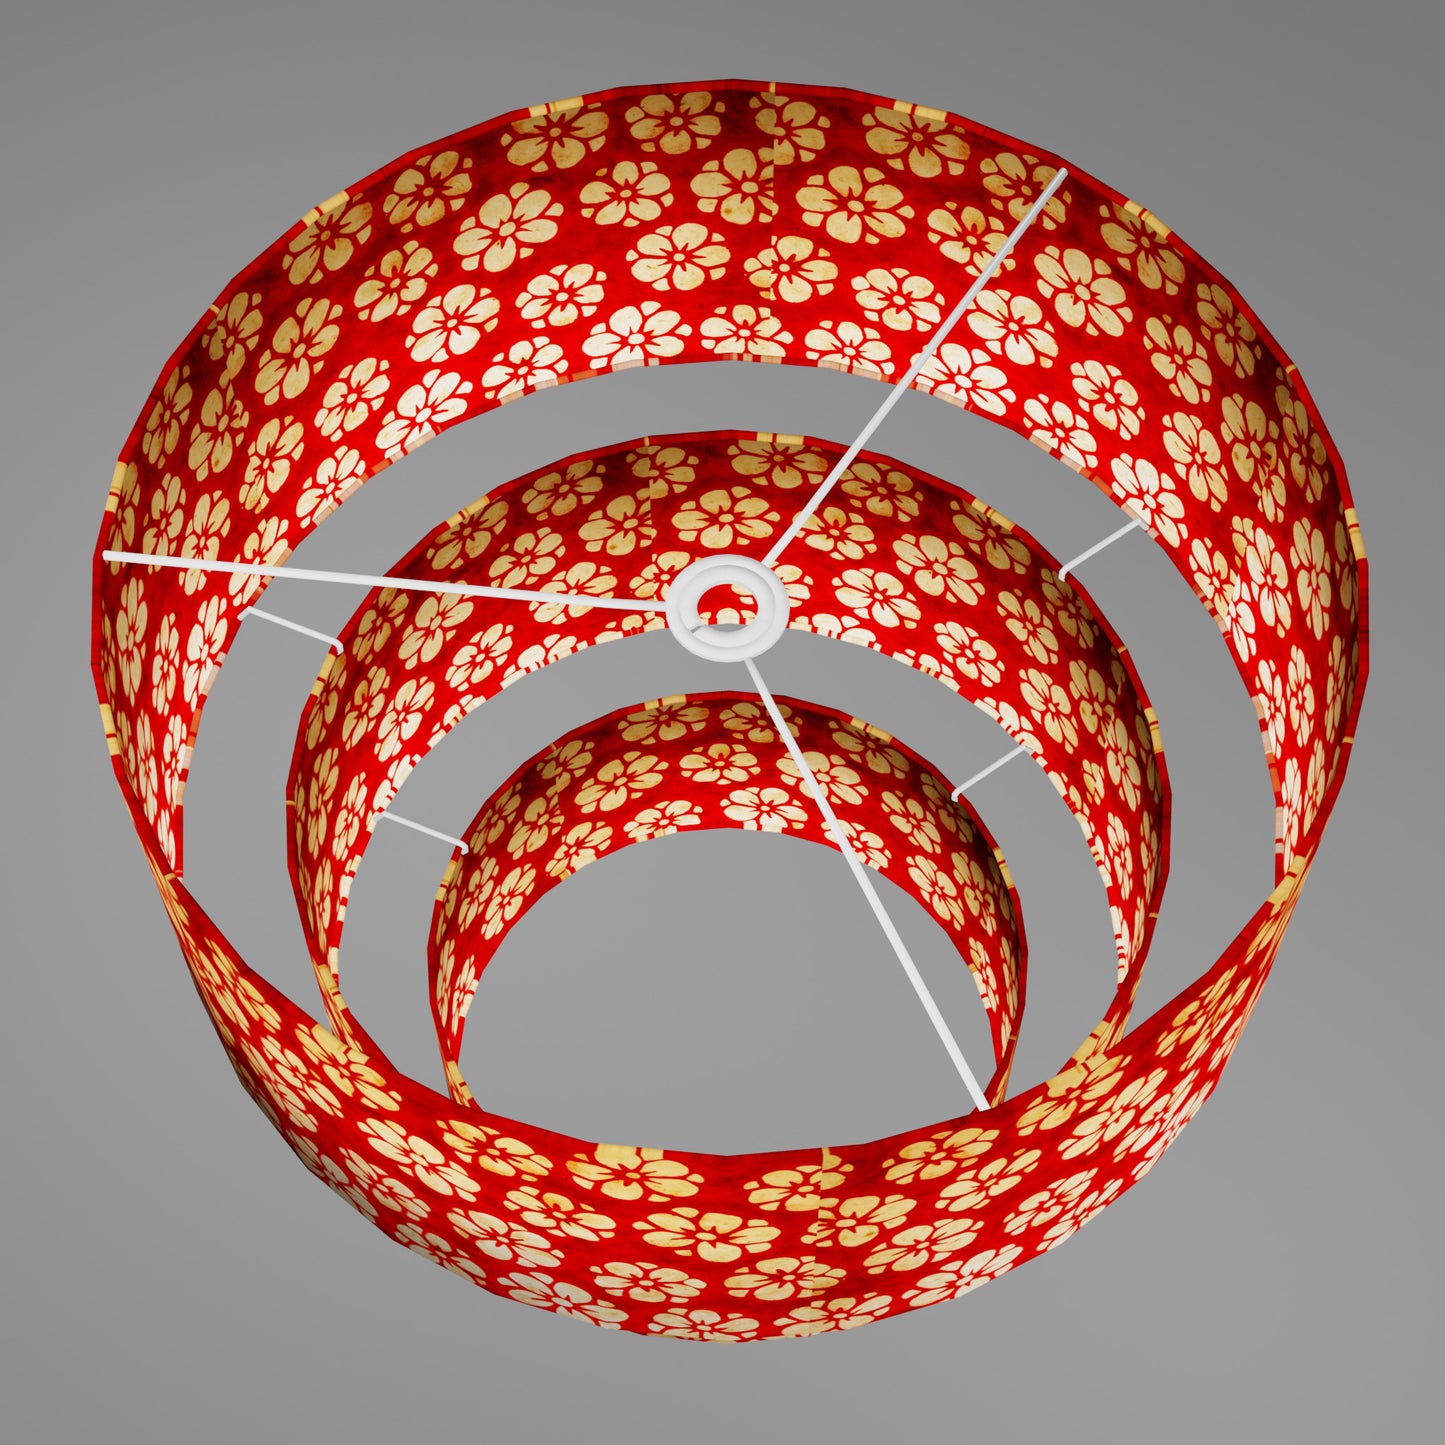 3 Tier Lamp Shade - P76 - Batik Star Flower Red, 50cm x 20cm, 40cm x 17.5cm & 30cm x 15cm